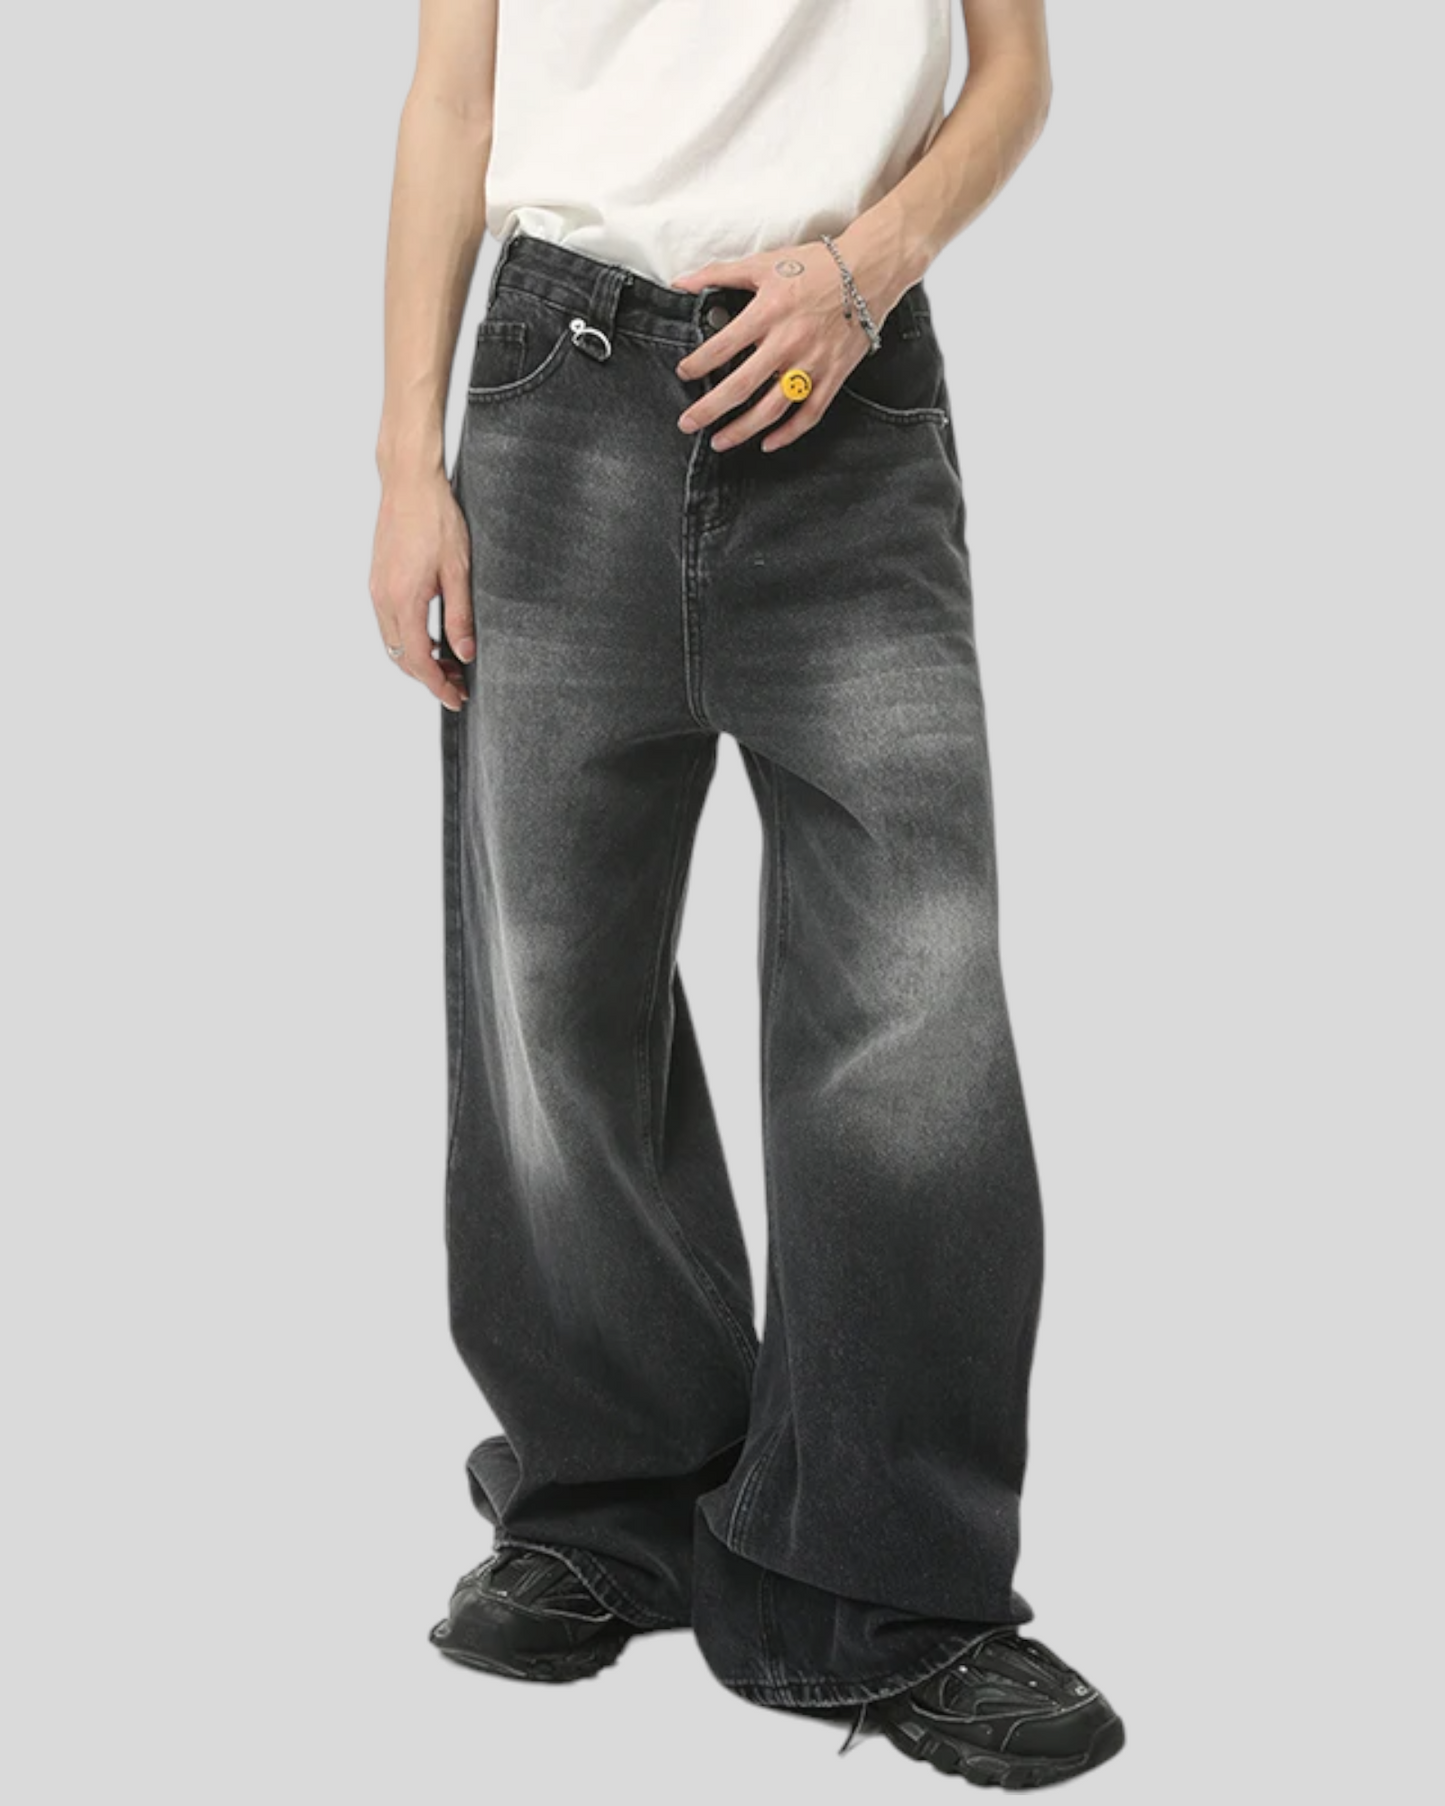 Men's Denim Black Grey Loose Fit Baggy Jeans, American Style.